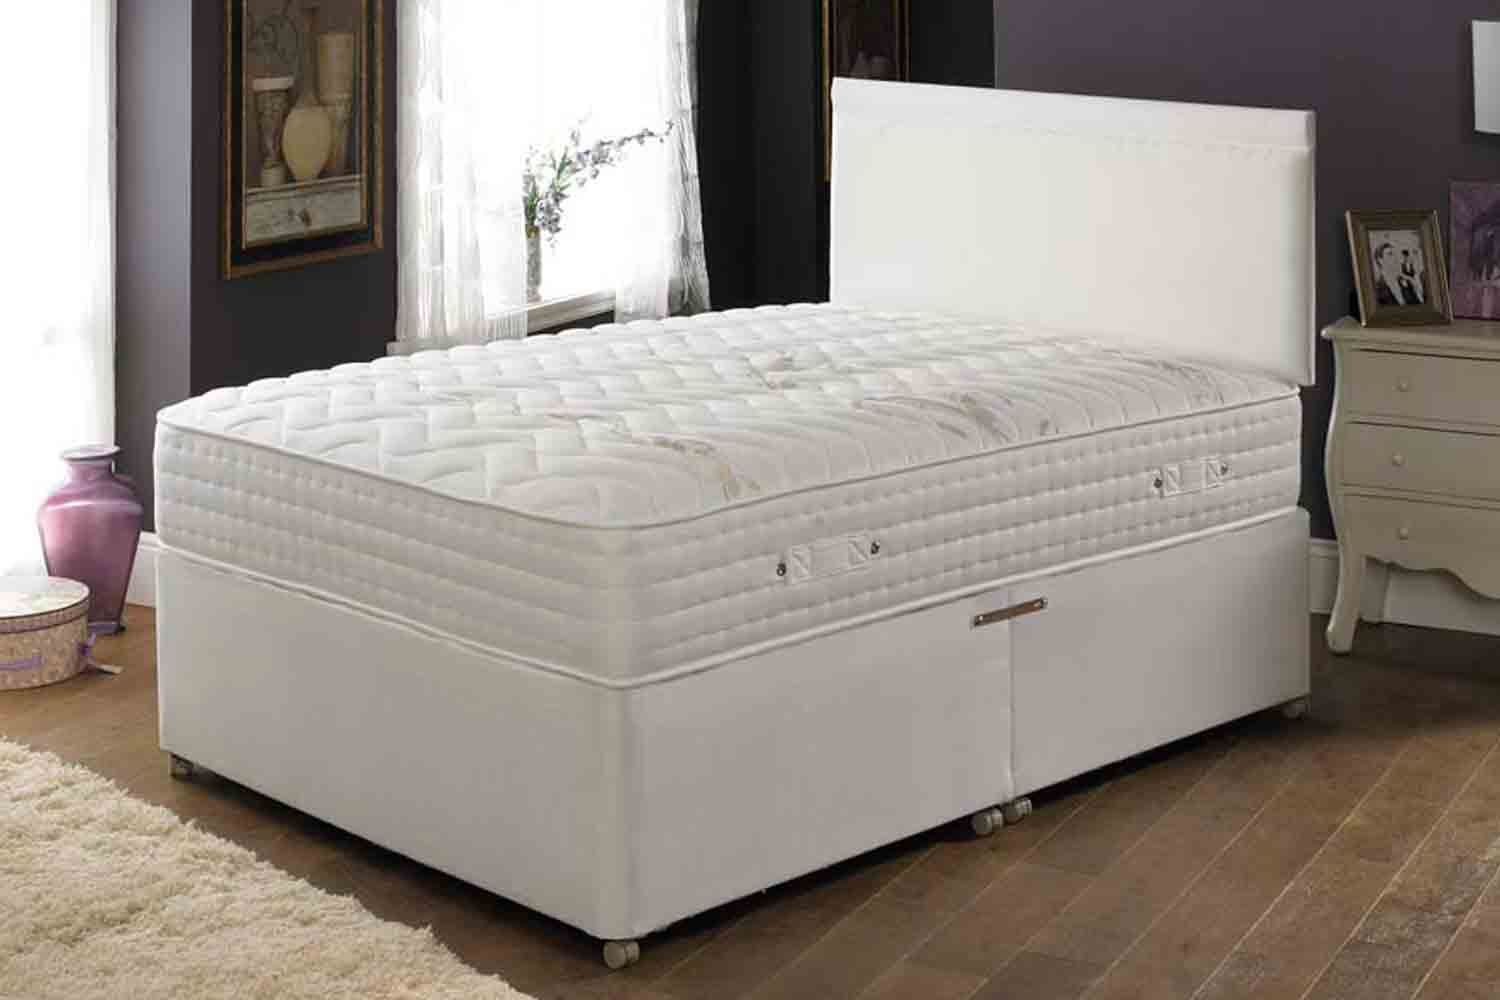 Joseph Crown Coronet Divan Bed-Small Single-2 Drawers Same Side